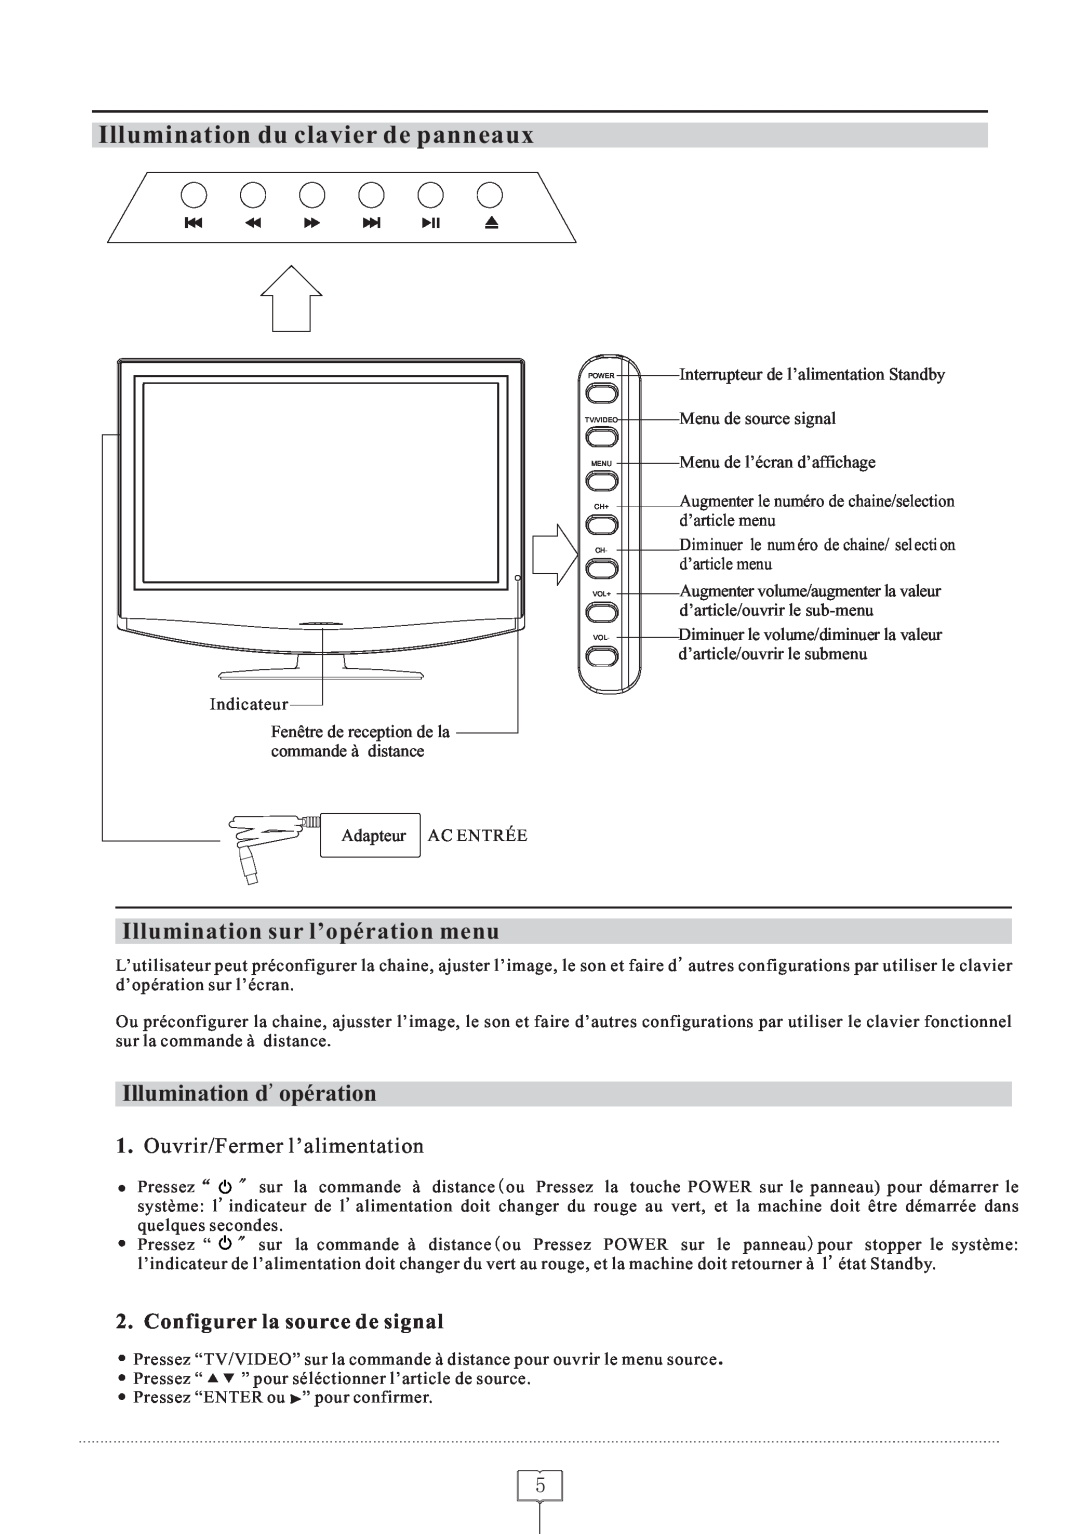 Curtis LCDVD152 manual Illumination sur l’opération menu, Illumination dopération, Ouvrir/Fermer l’alimentation 